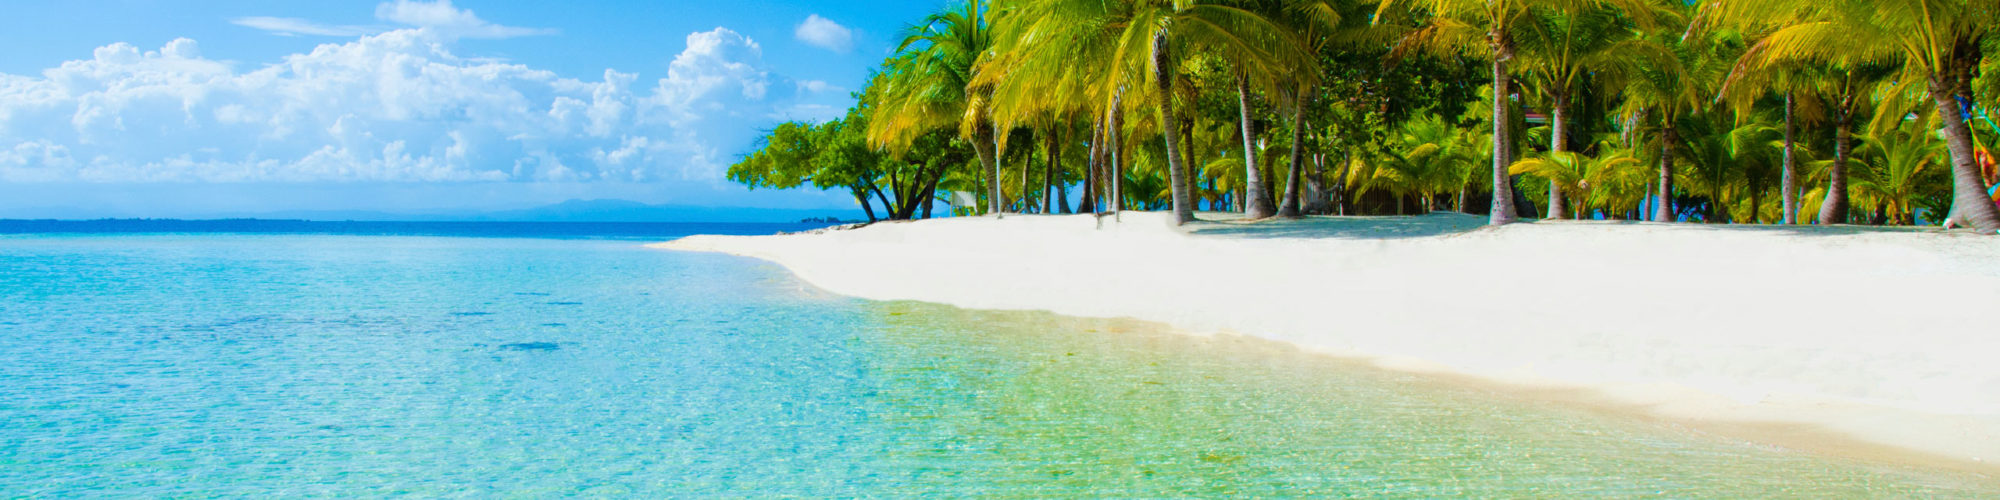 Belize travel agents packages deals